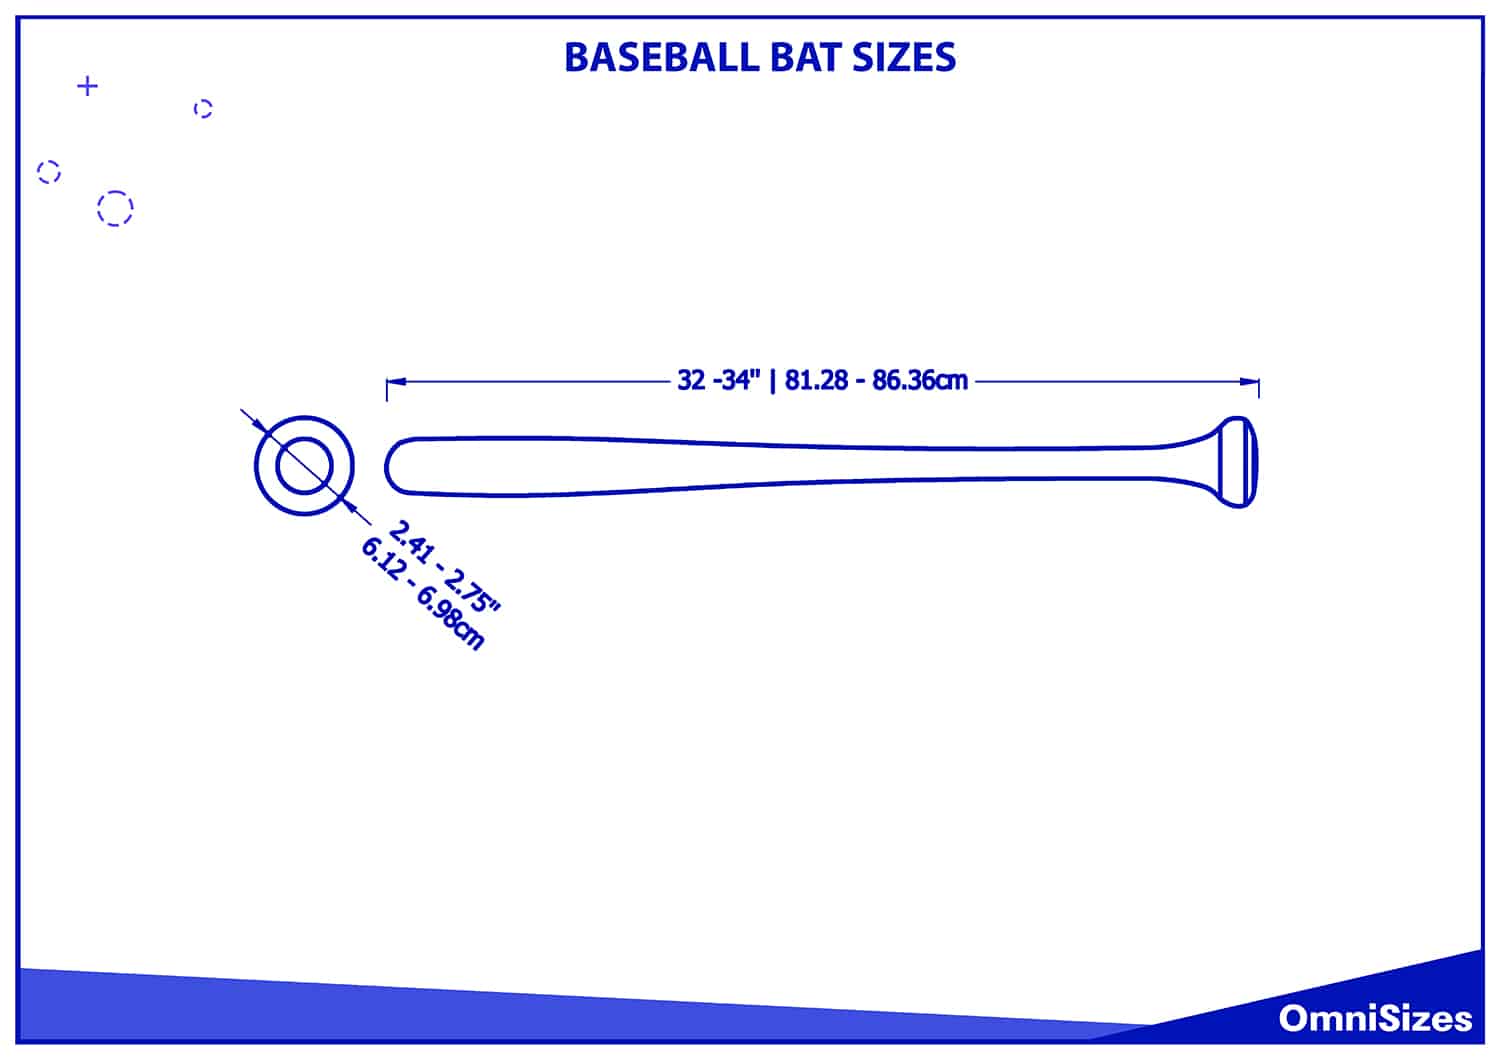 Baseball bat sizes